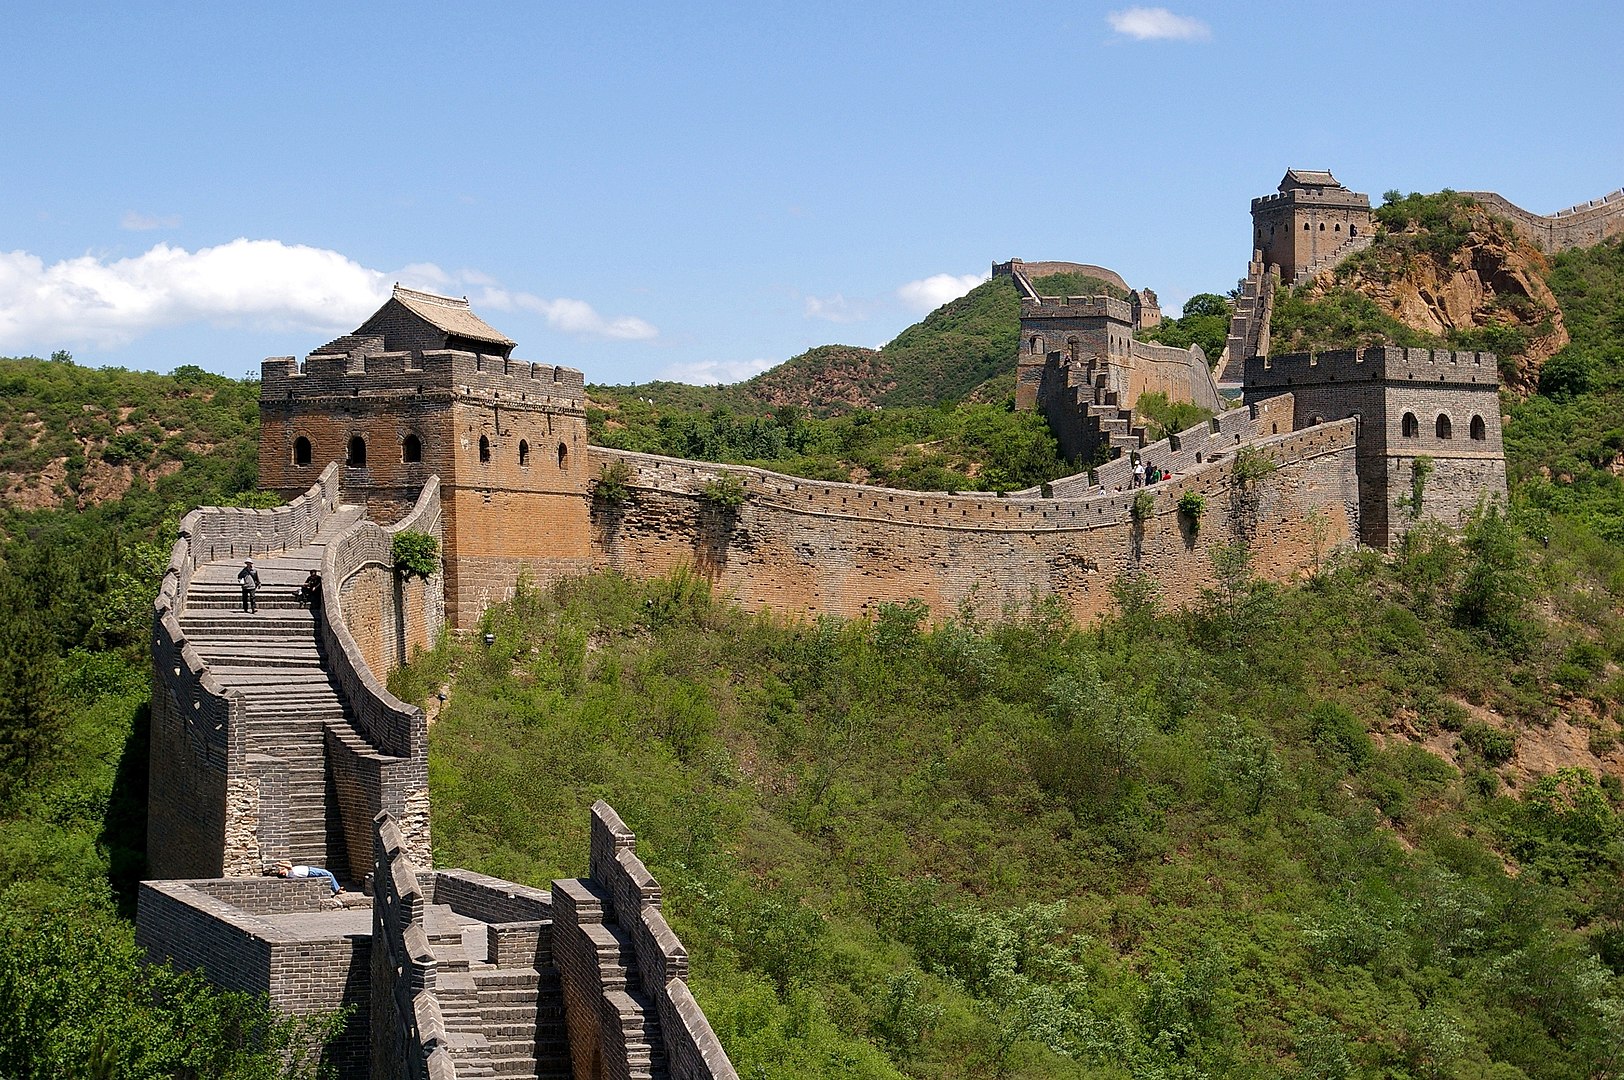 Китайская стена. Древняя Великая китайская стена. Великая китайская стена глинобитная. Архитектура древнего Китая Великая китайская стена. Великая китайская стена фото.